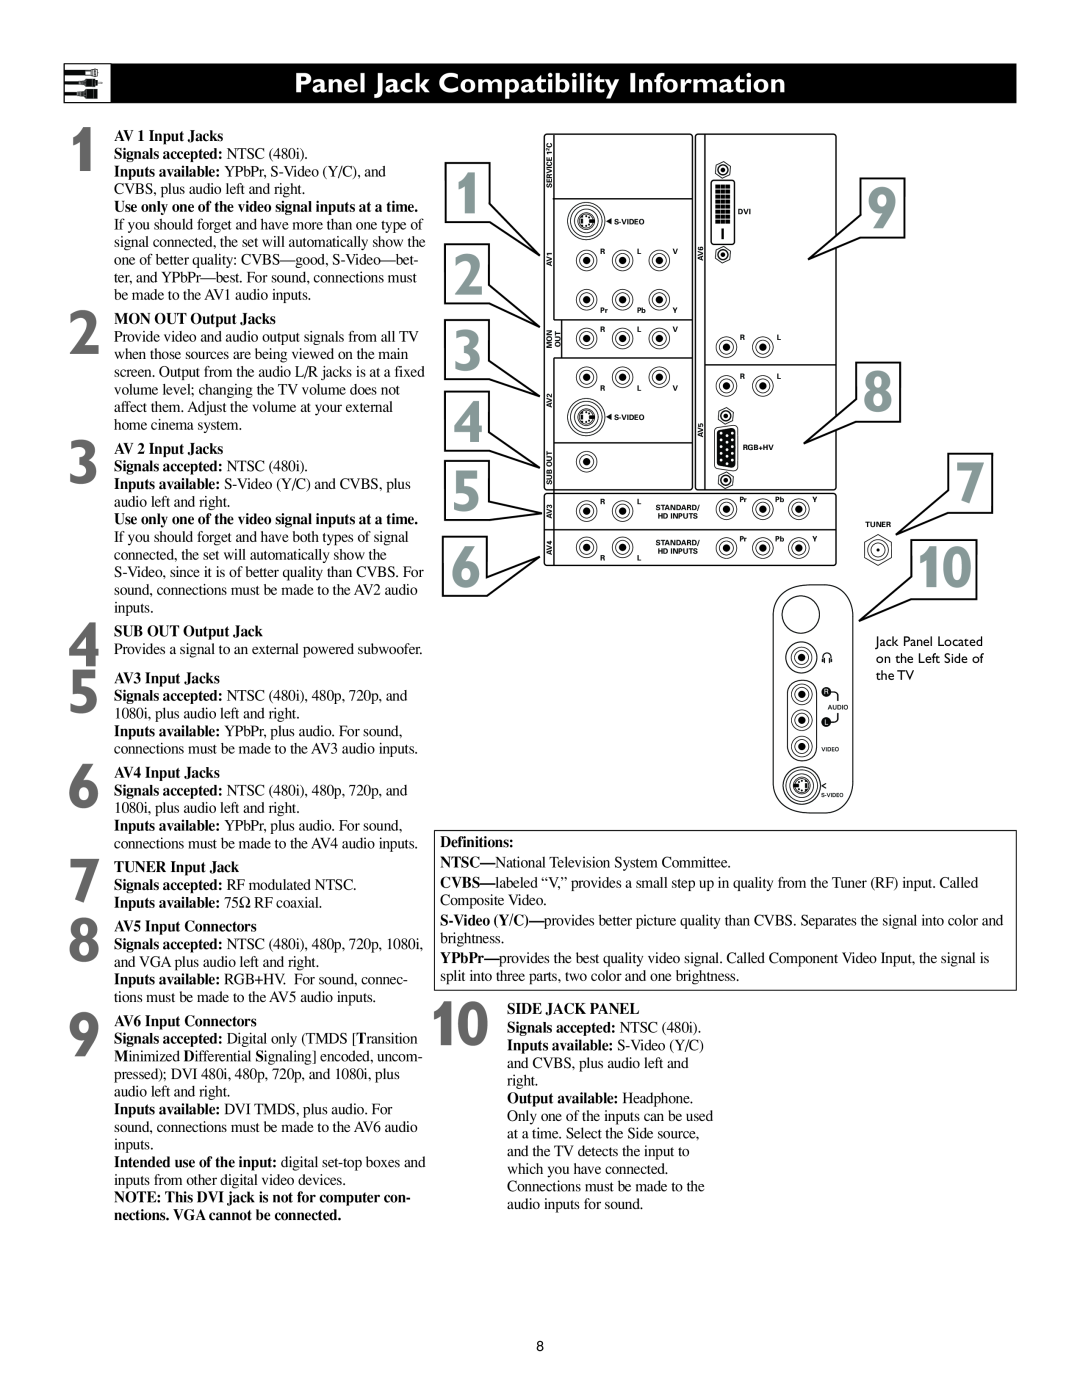 Philips 62PL9524, 55PL9524 setup guide Panel Jack Compatibility Information 